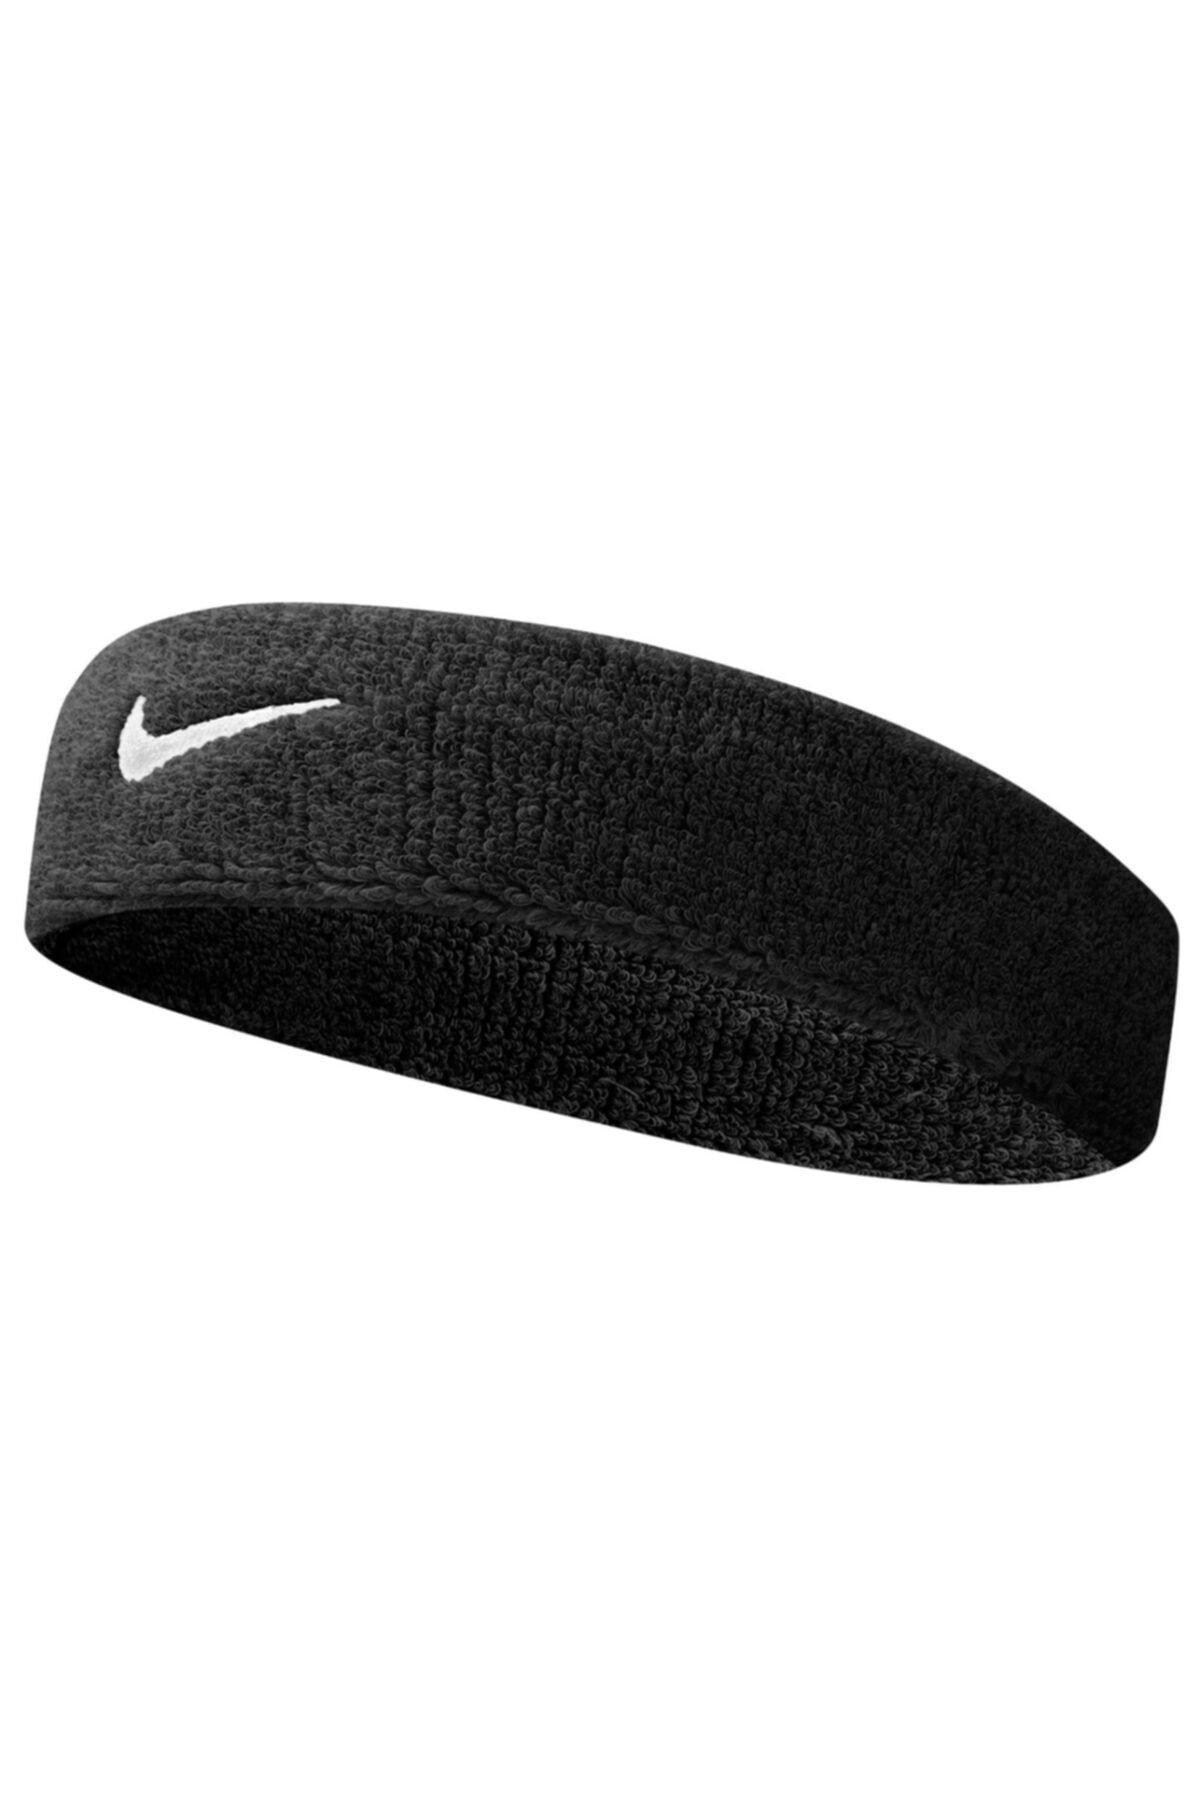 Nike Swoosh Headband Havlu Kafa Bandı Siyah